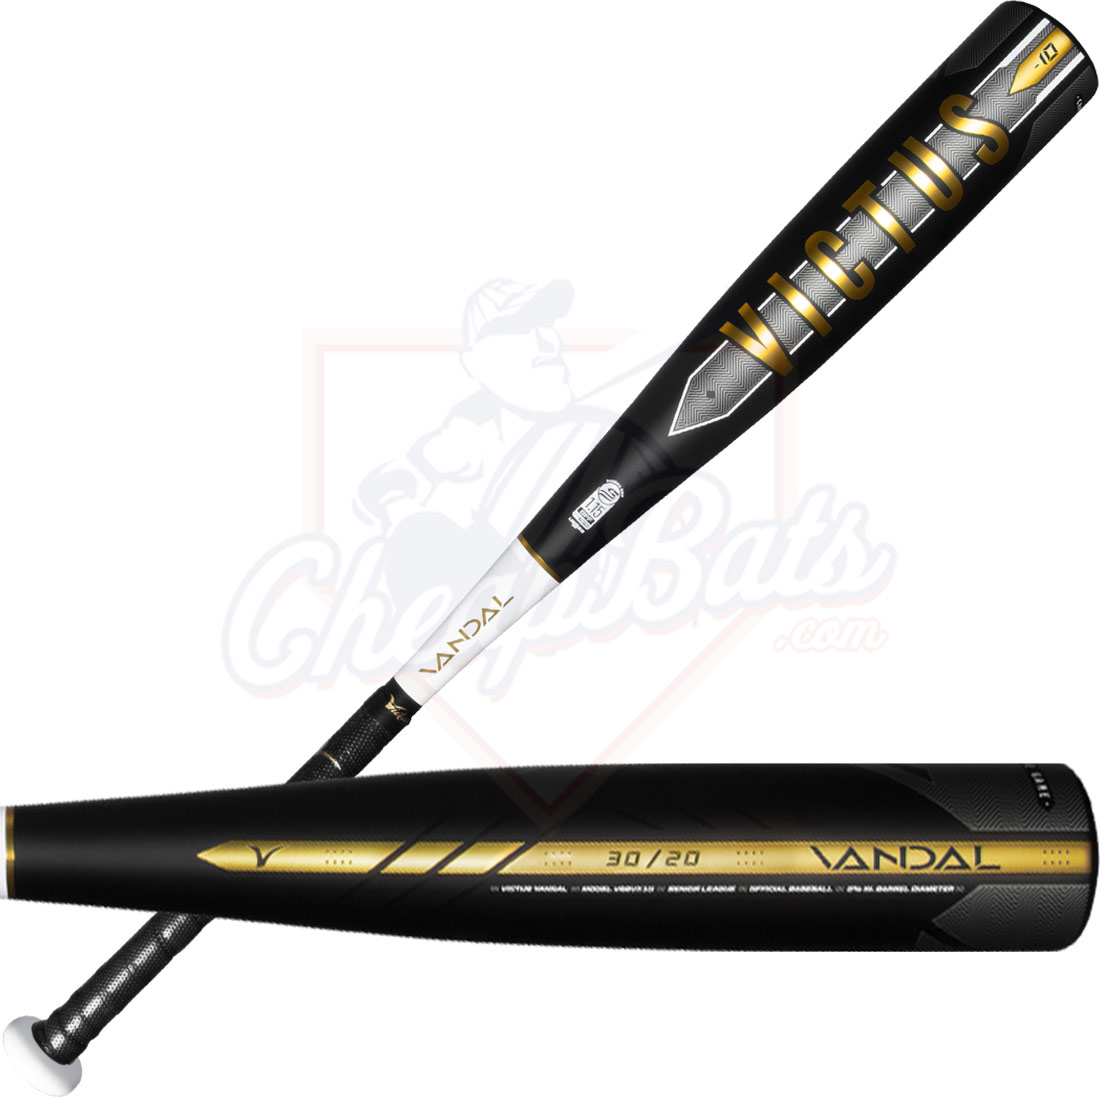 2021 Victus Vandal Youth USSSA Baseball Bat -10oz VSBVX10